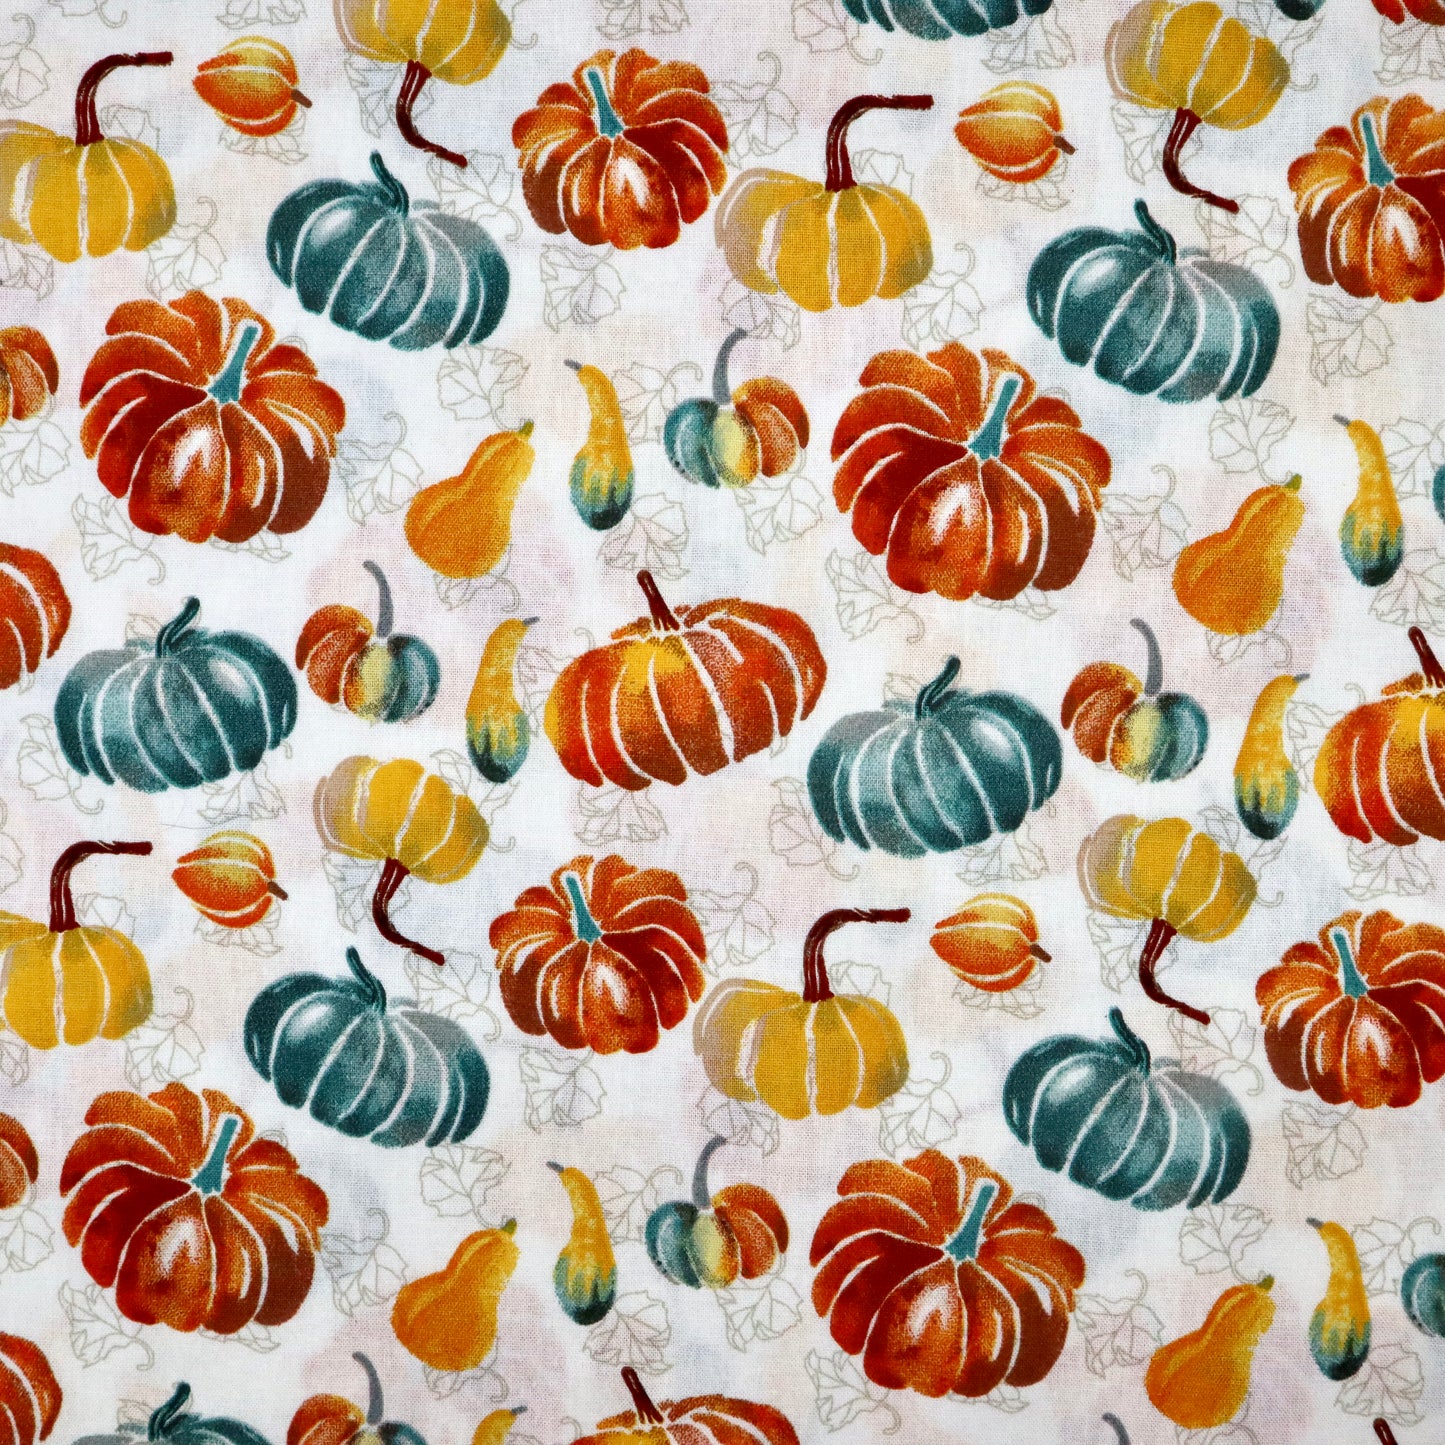 Pumpkins & Gourds in Jewel Tones - Quilting Cotton